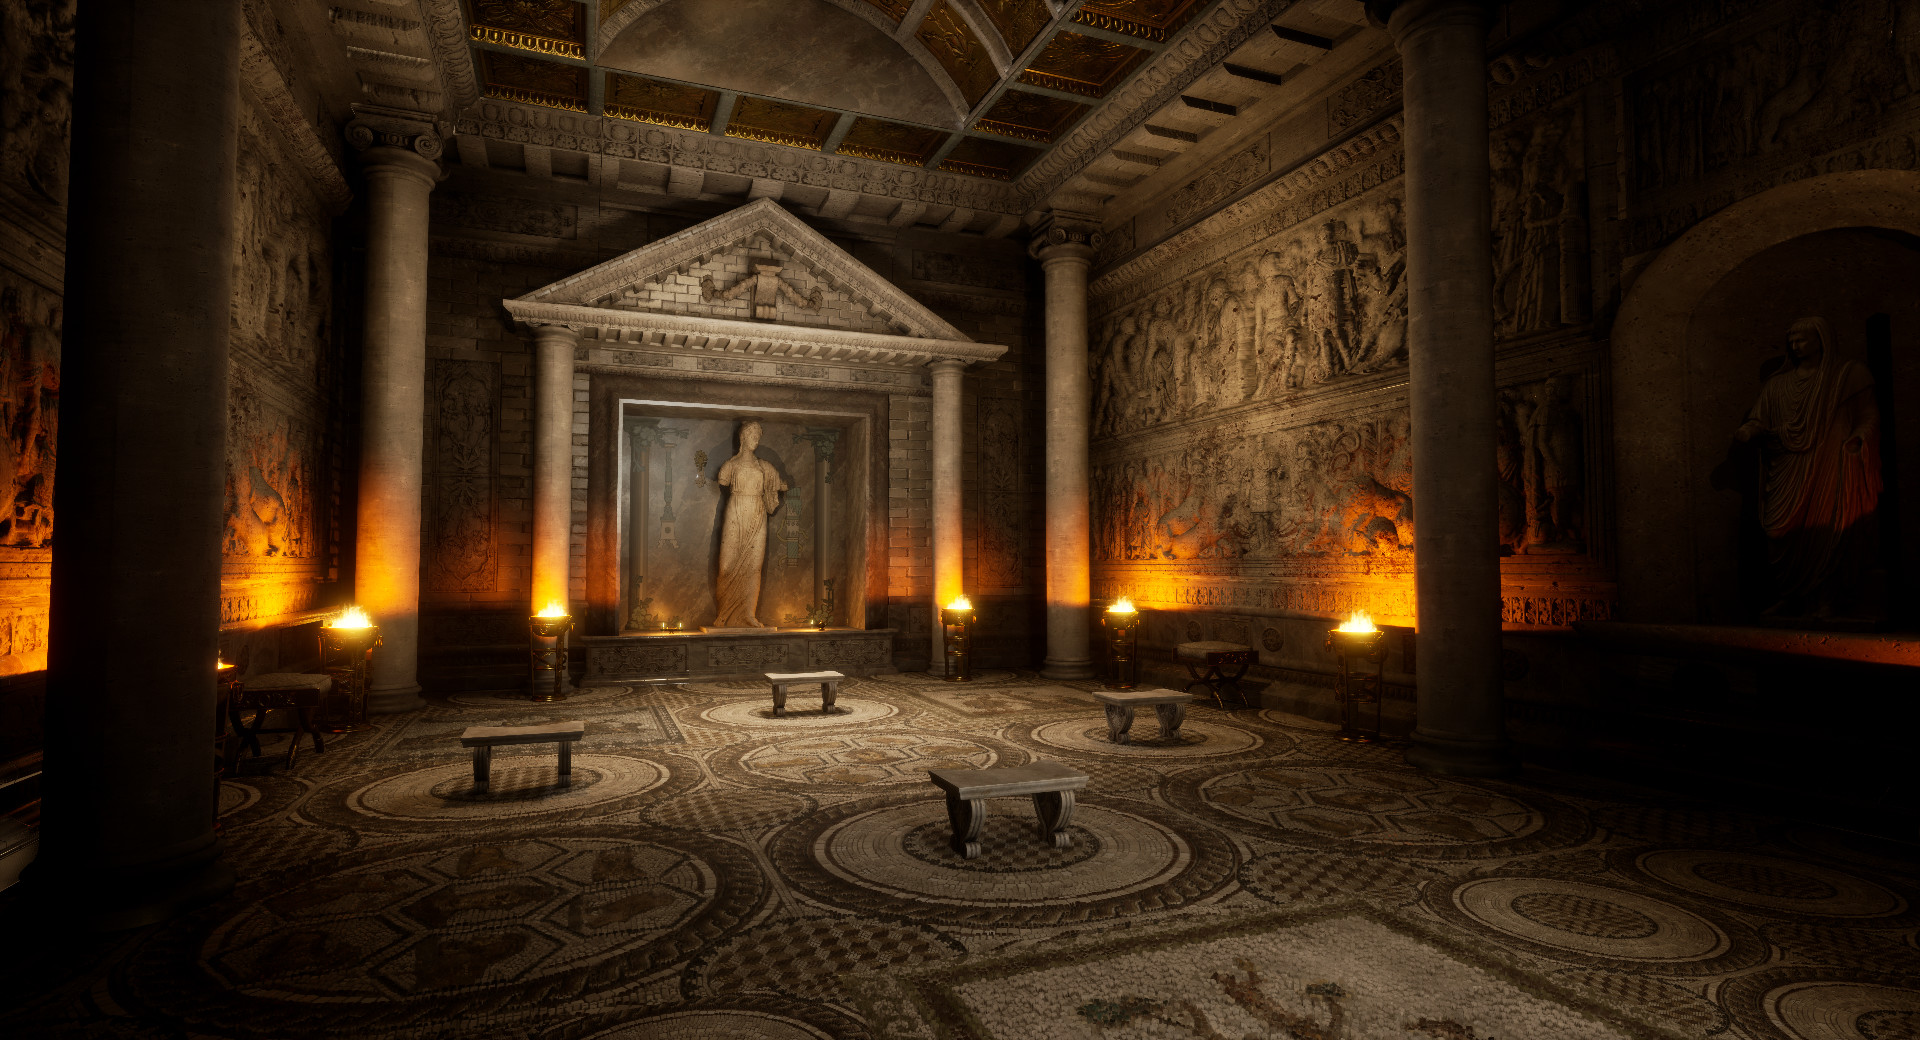 Roman temple. Древний азиатский храм интерьер. Old House Interior Bible age Roman Empire. Rome aesthetic.